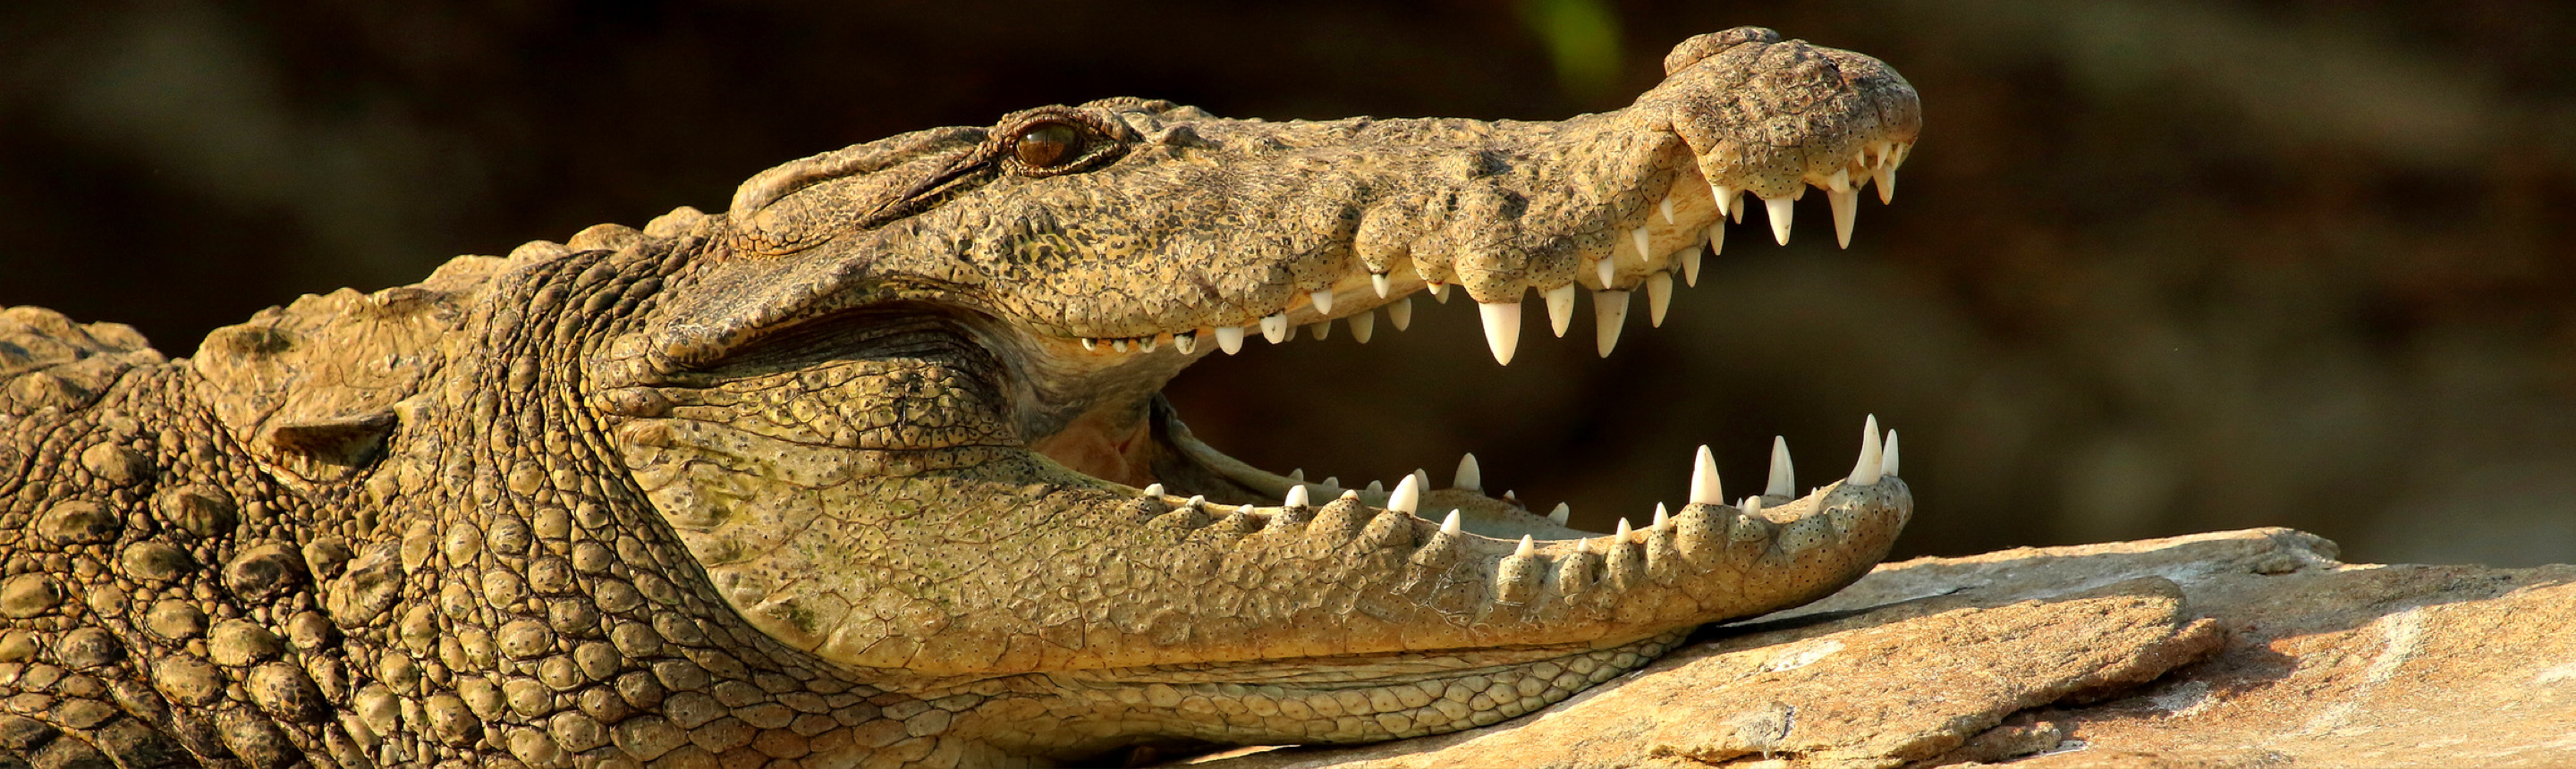 Chinese city hunts for dozens of crocodiles, Taiwan News